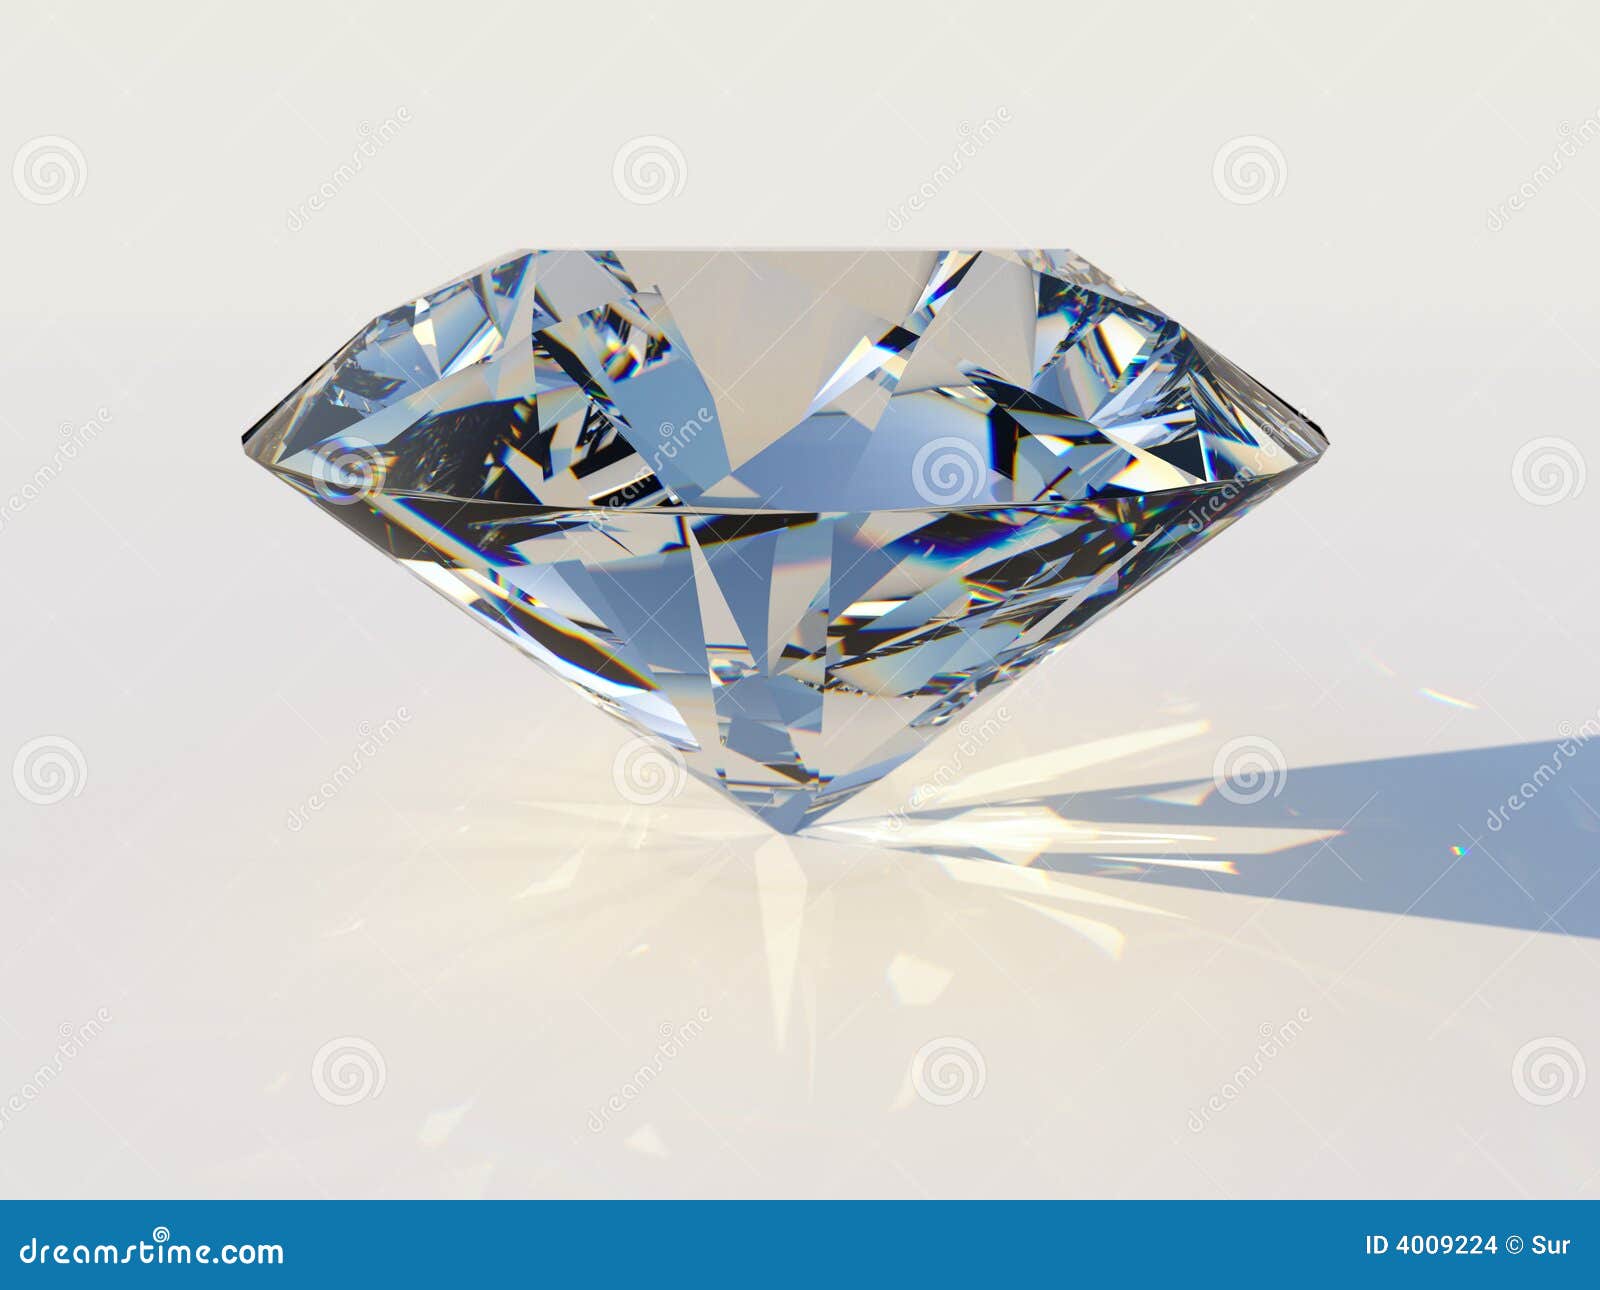 diamond with dispersion